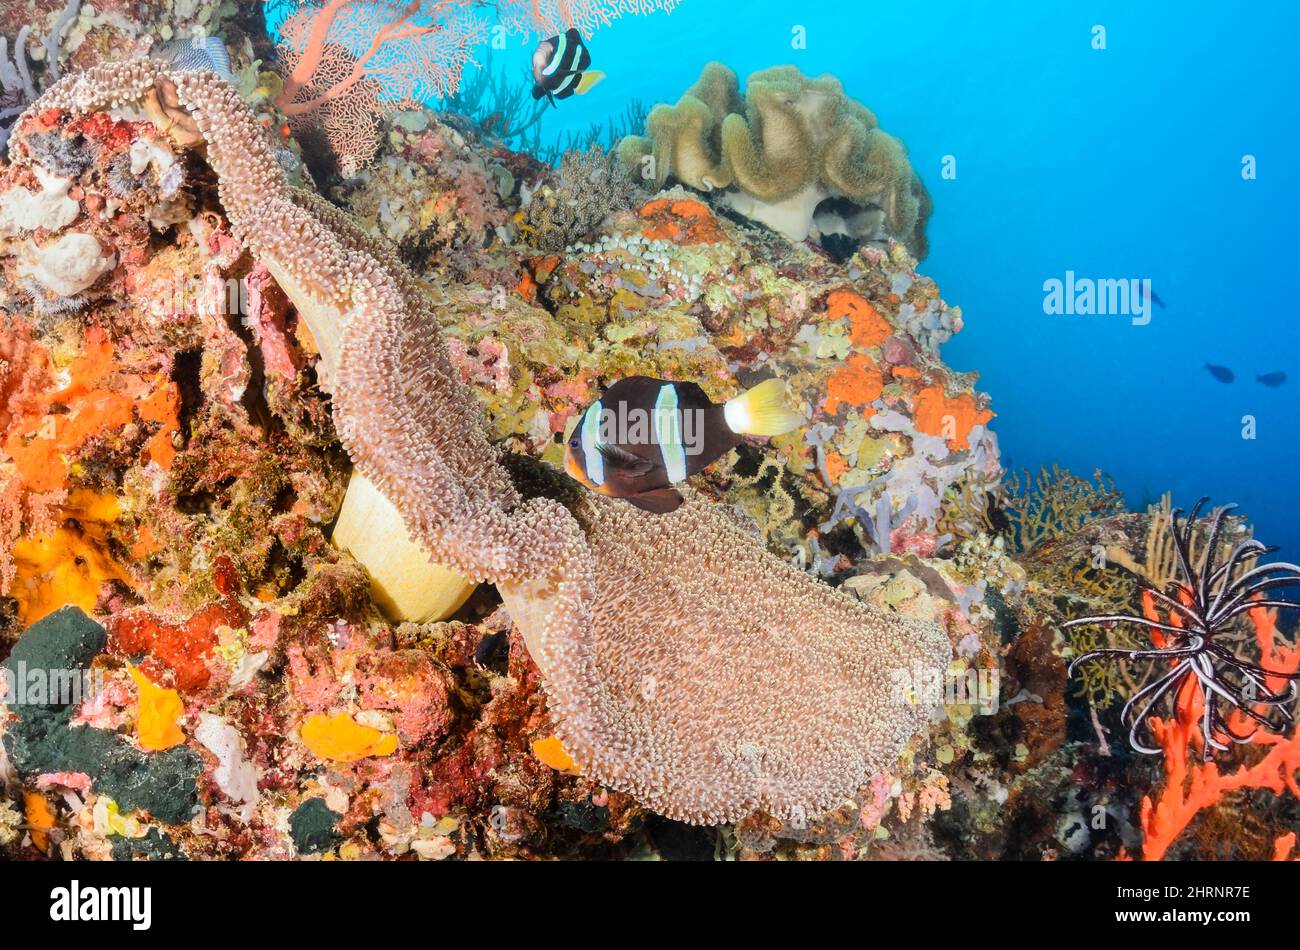 Clark's Anemonefish, Amphiprion clarkii, Menjangan Island, Bali Barat Marine Park, Bali, Indonesia, Pacific Stock Photo